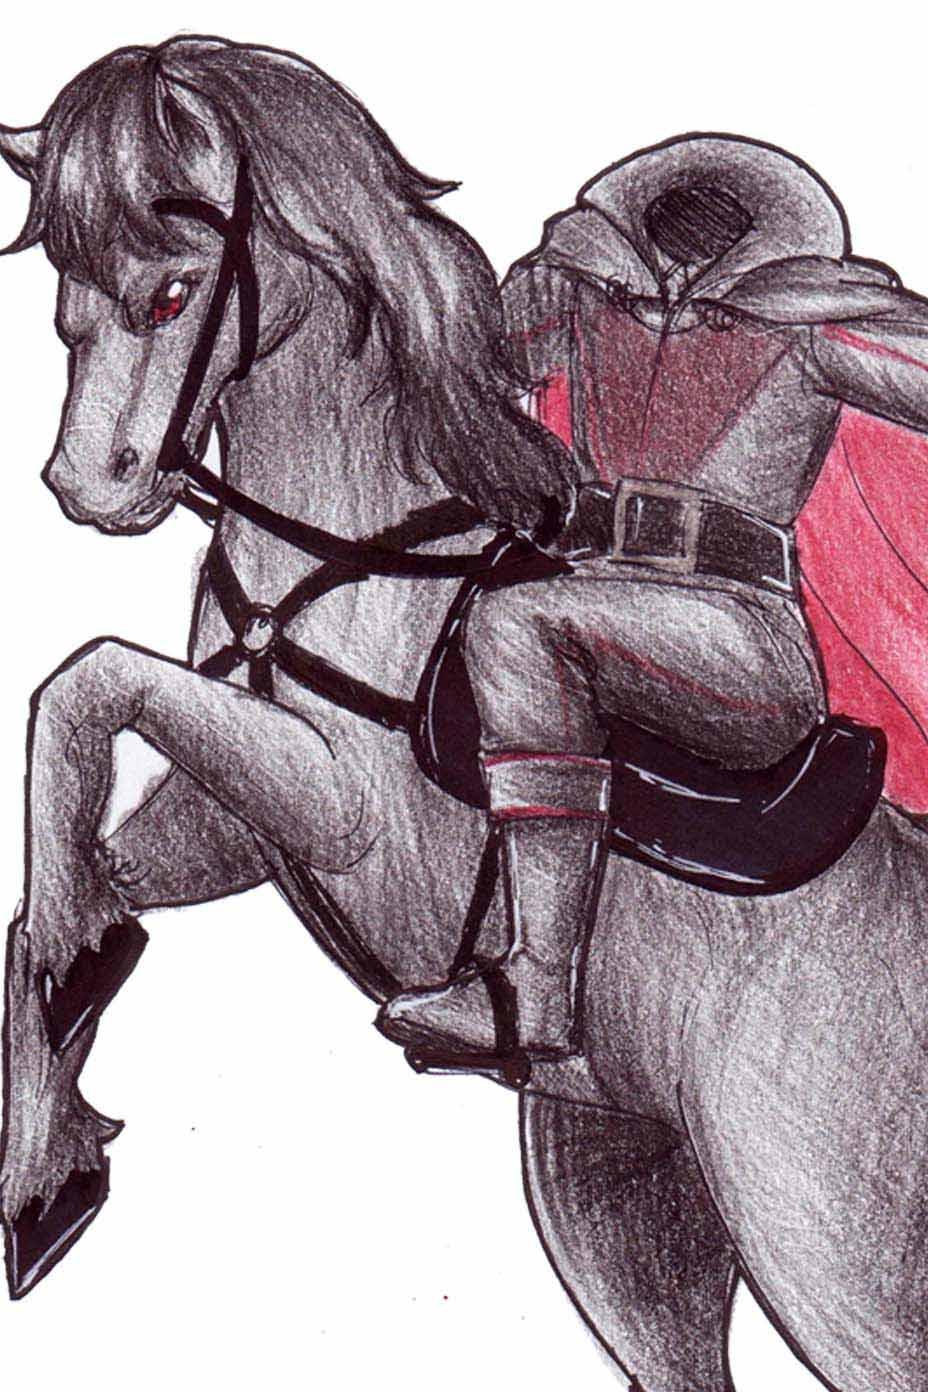 Headless Horseman Drawing at GetDrawings Free download